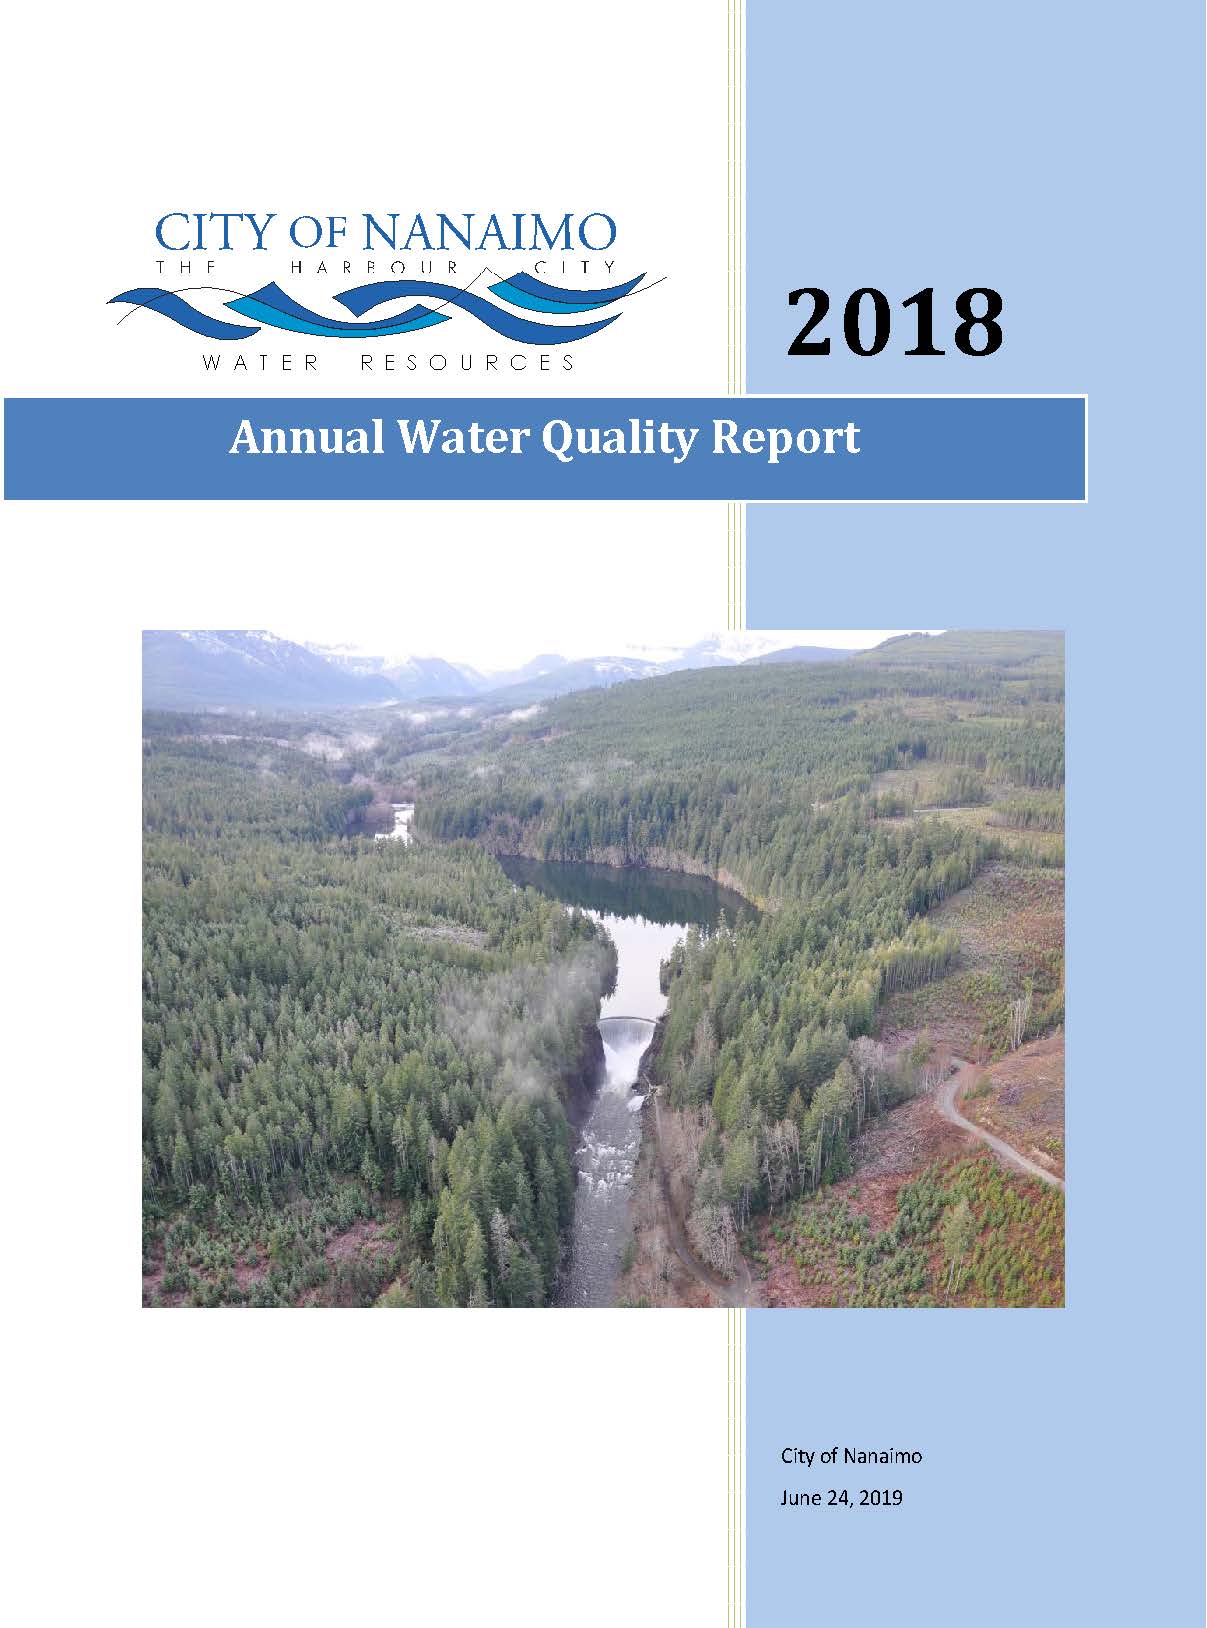 city of phoenix water quality report